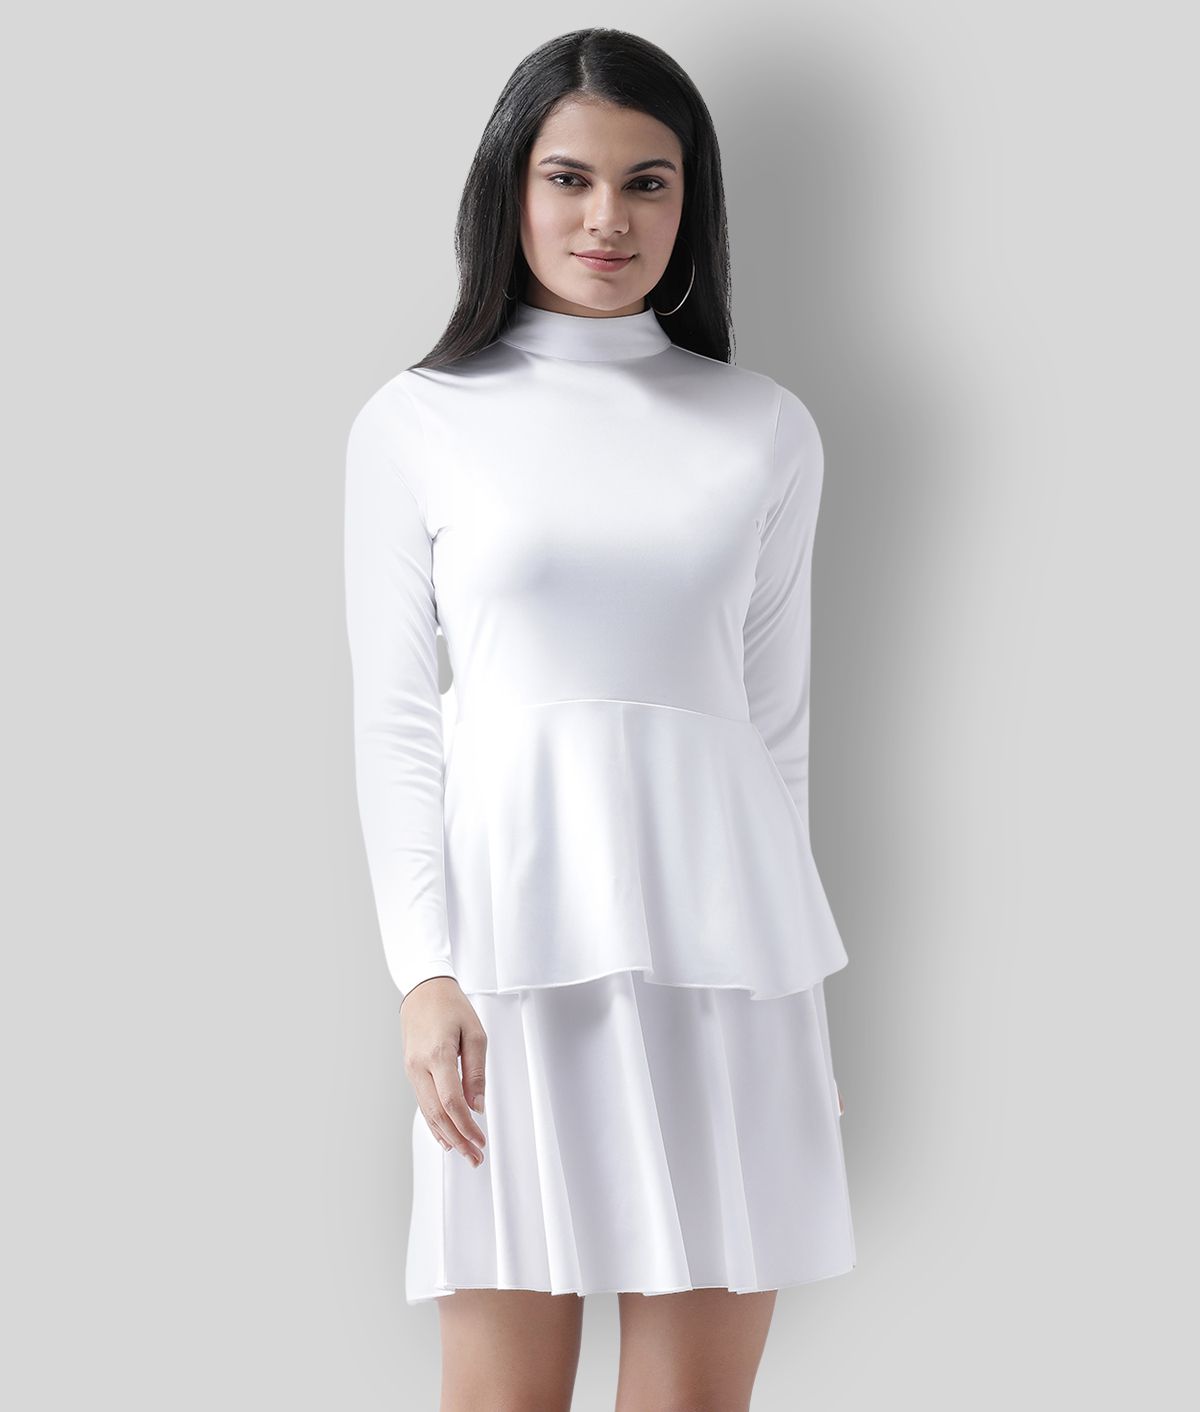 Texco - White Polyester Women's Peplum Dress ( Pack of 1 )